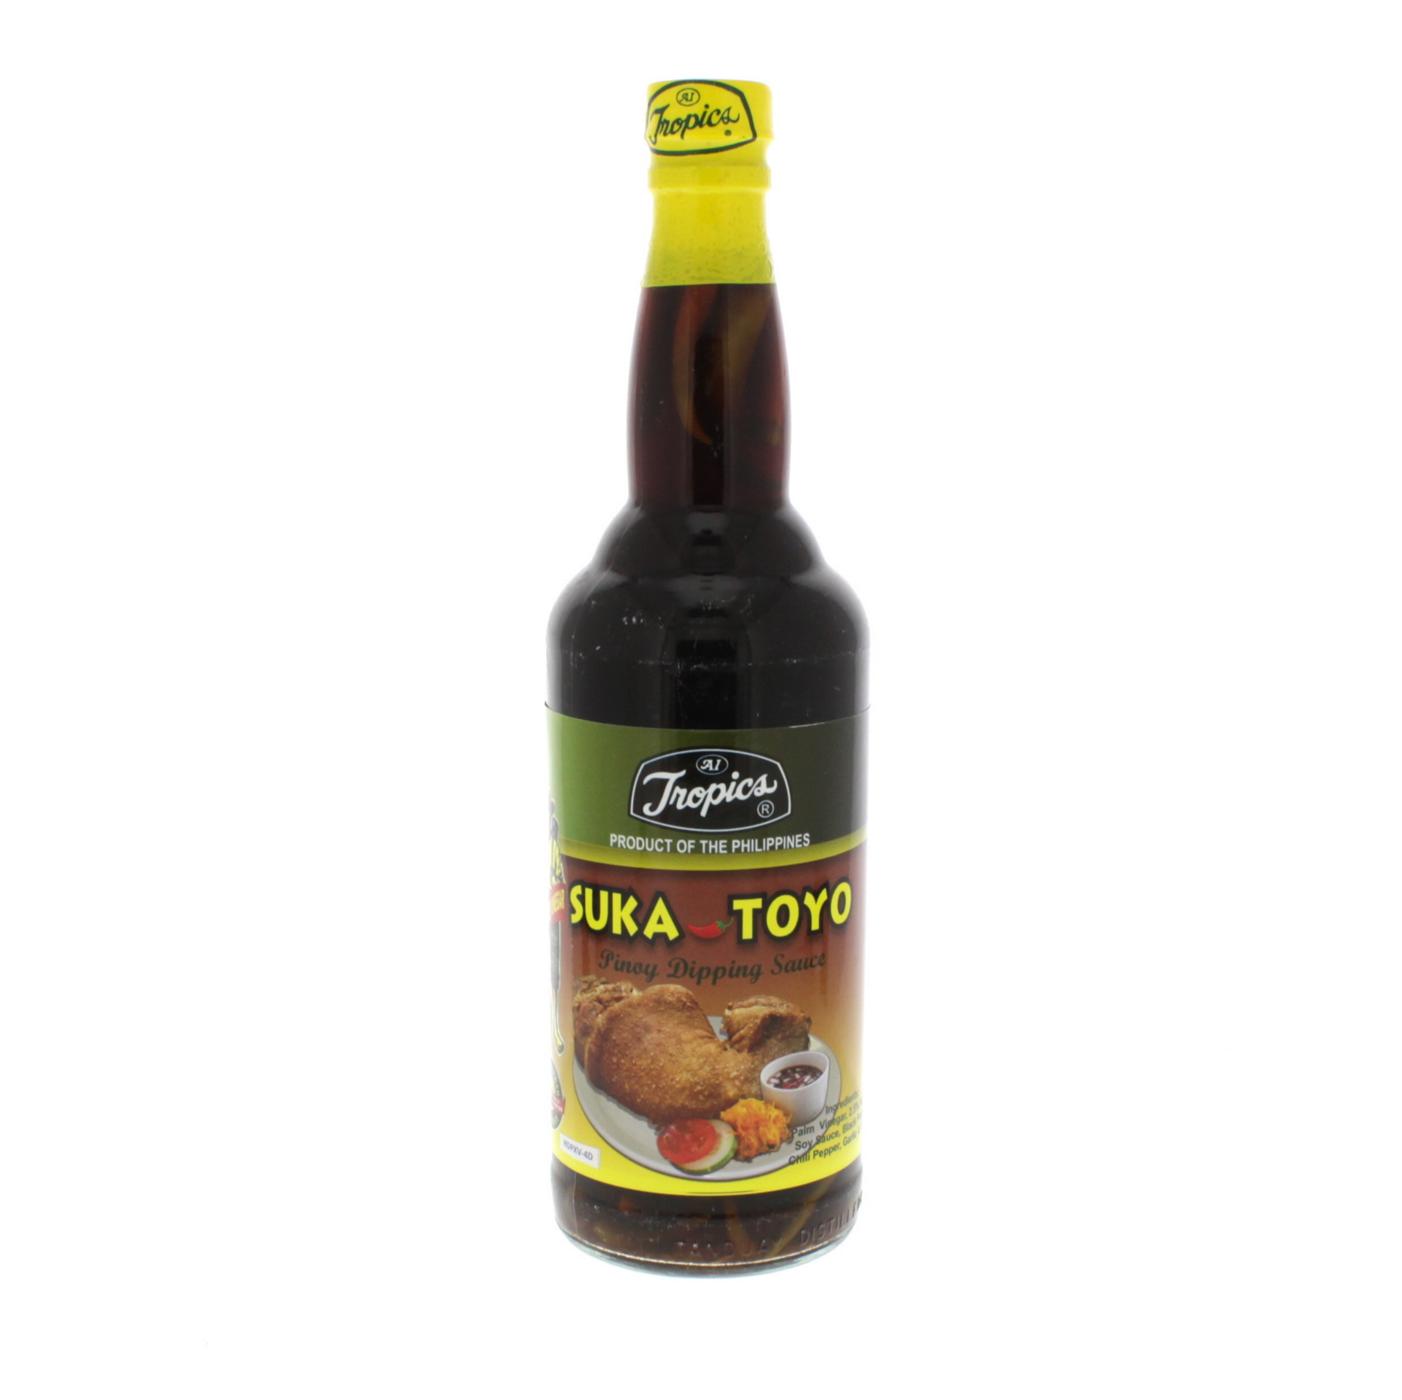 Tropics Suka-Toyo Pinoy Dipping Sauce; image 1 of 2